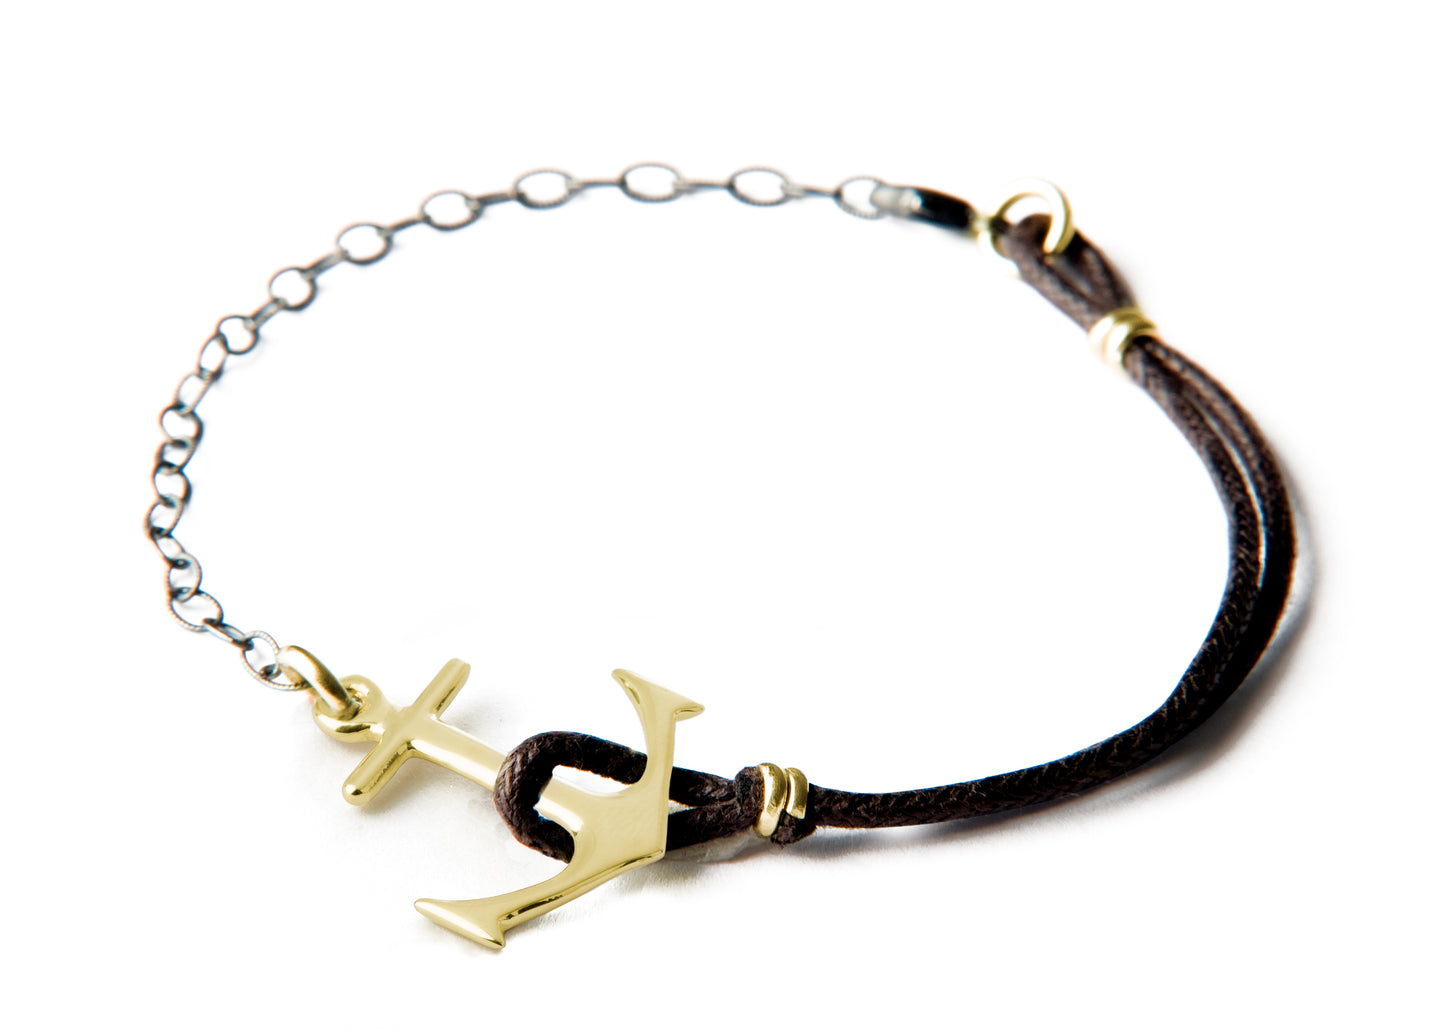 Anchor Bracelet - Big gold anchor